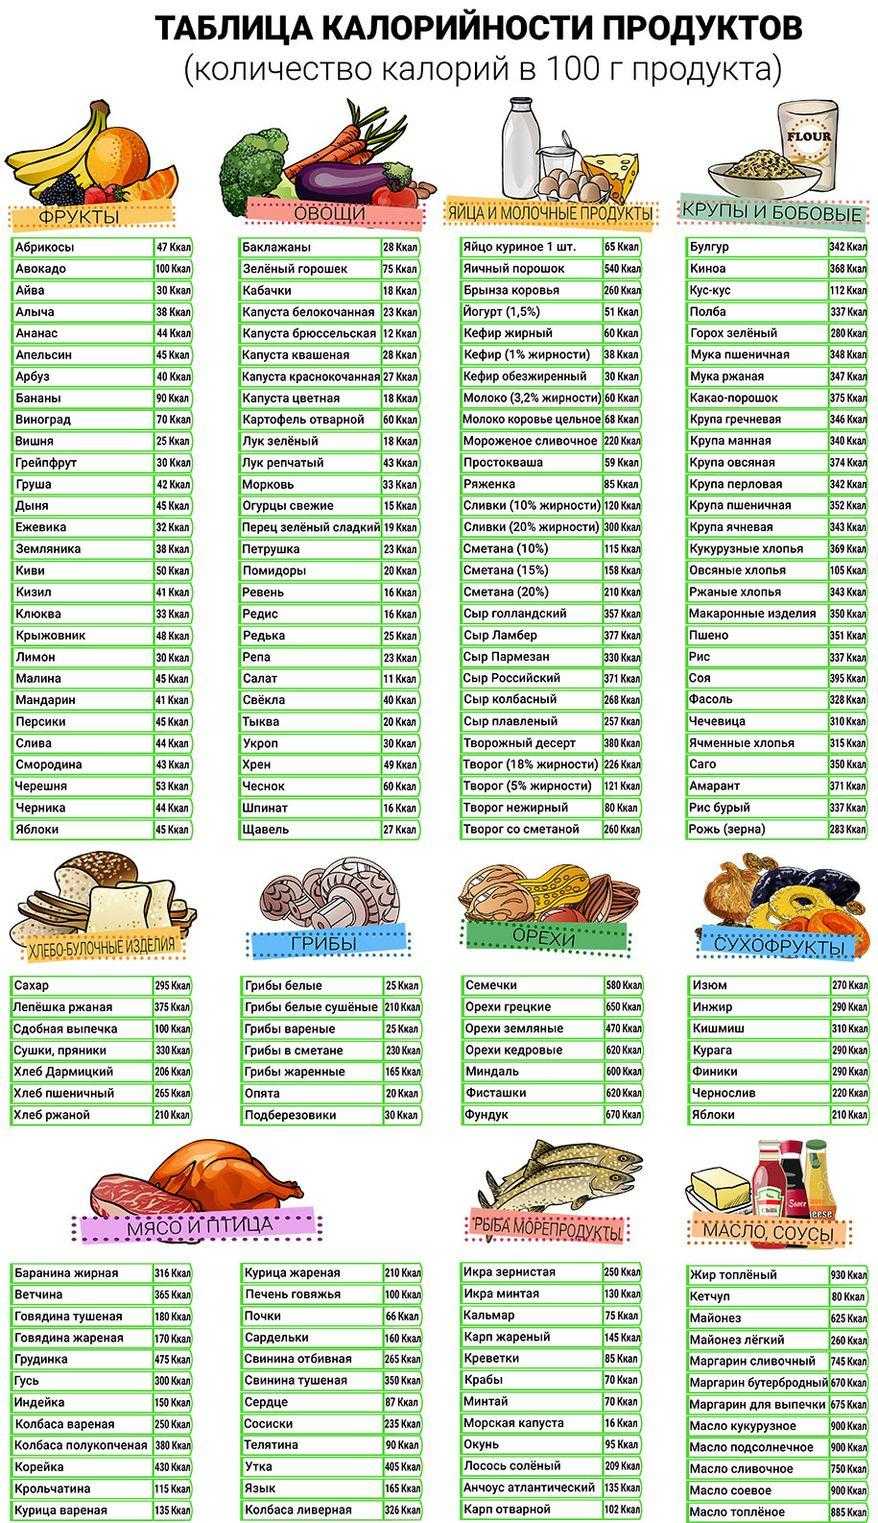 Таблица калорийности продуктов на 100 грамм